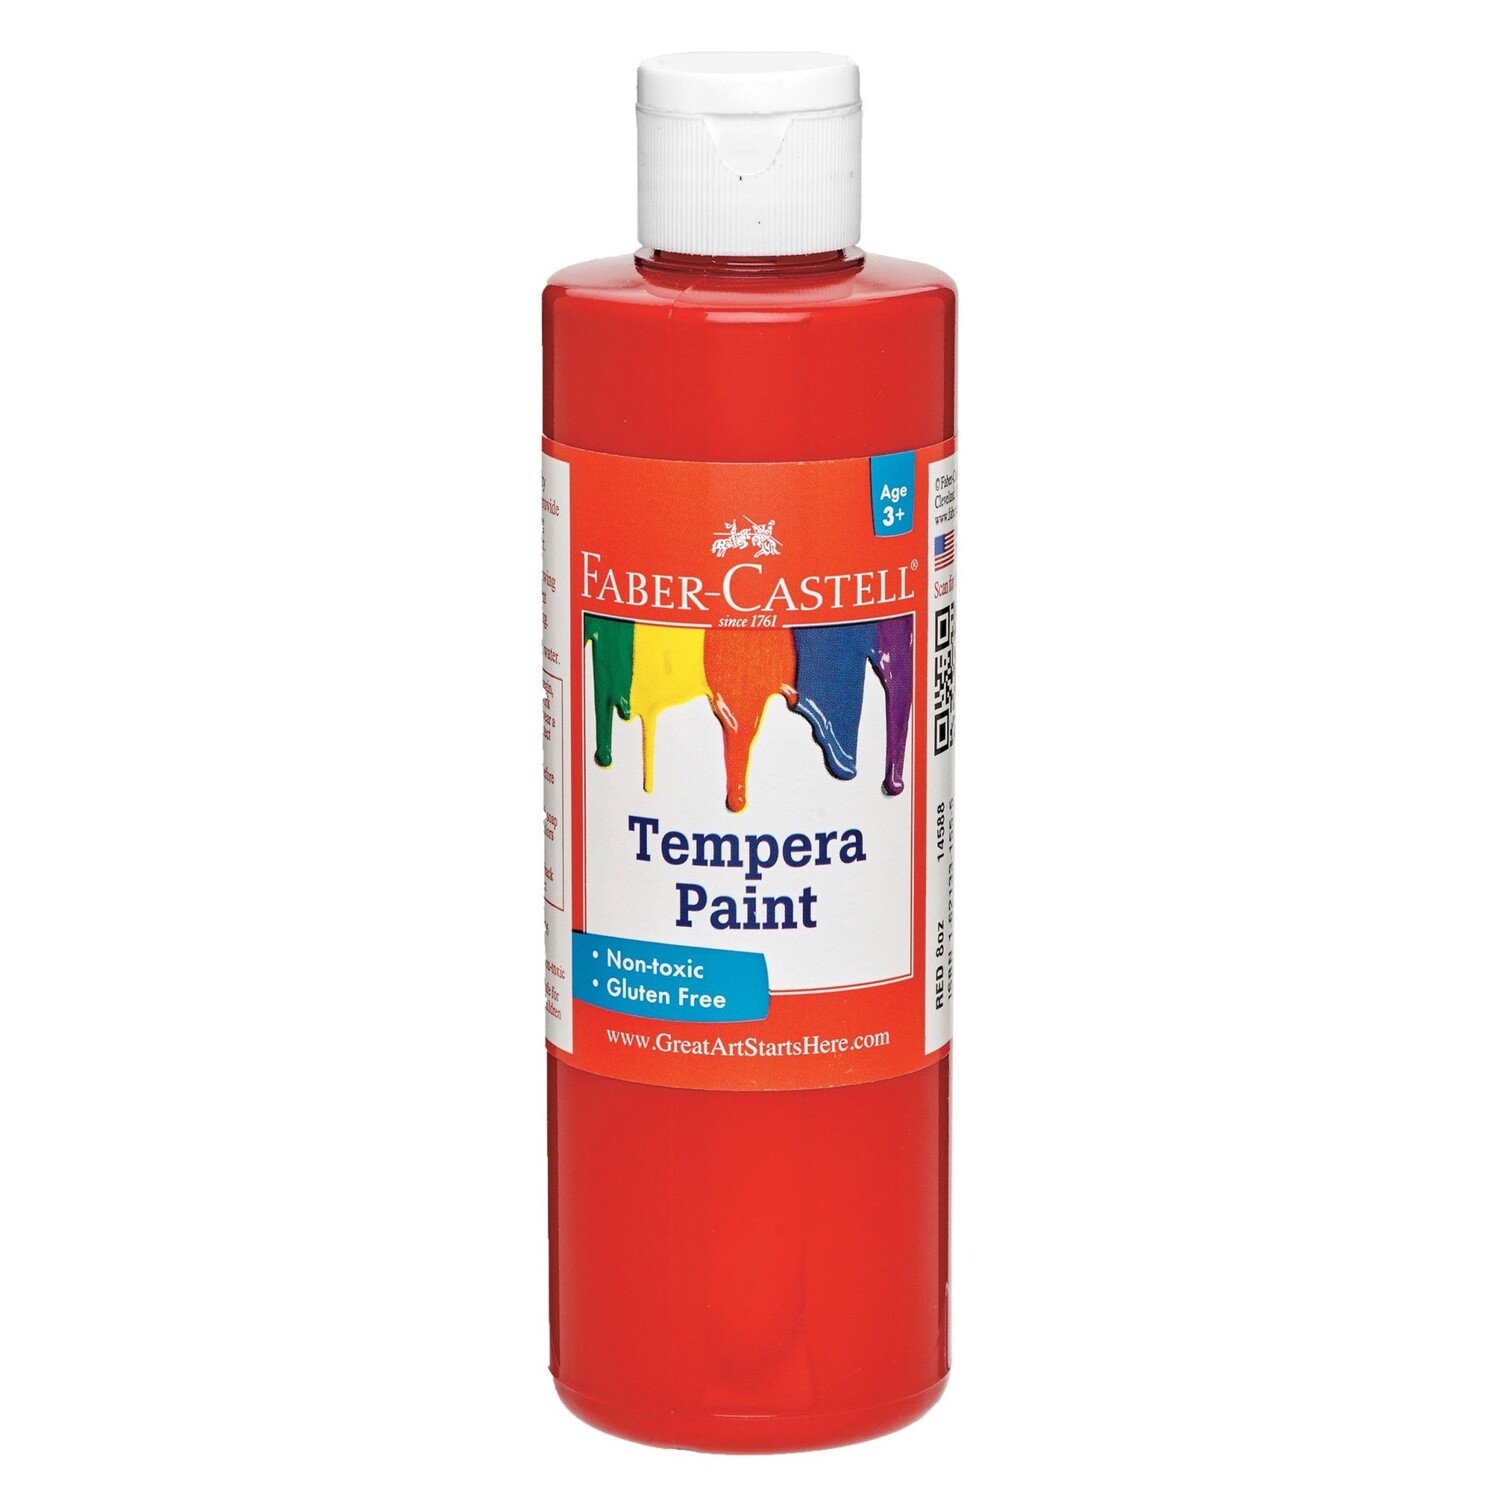 Faber-Castell Tempera Paint - Red (8 oz bottles)